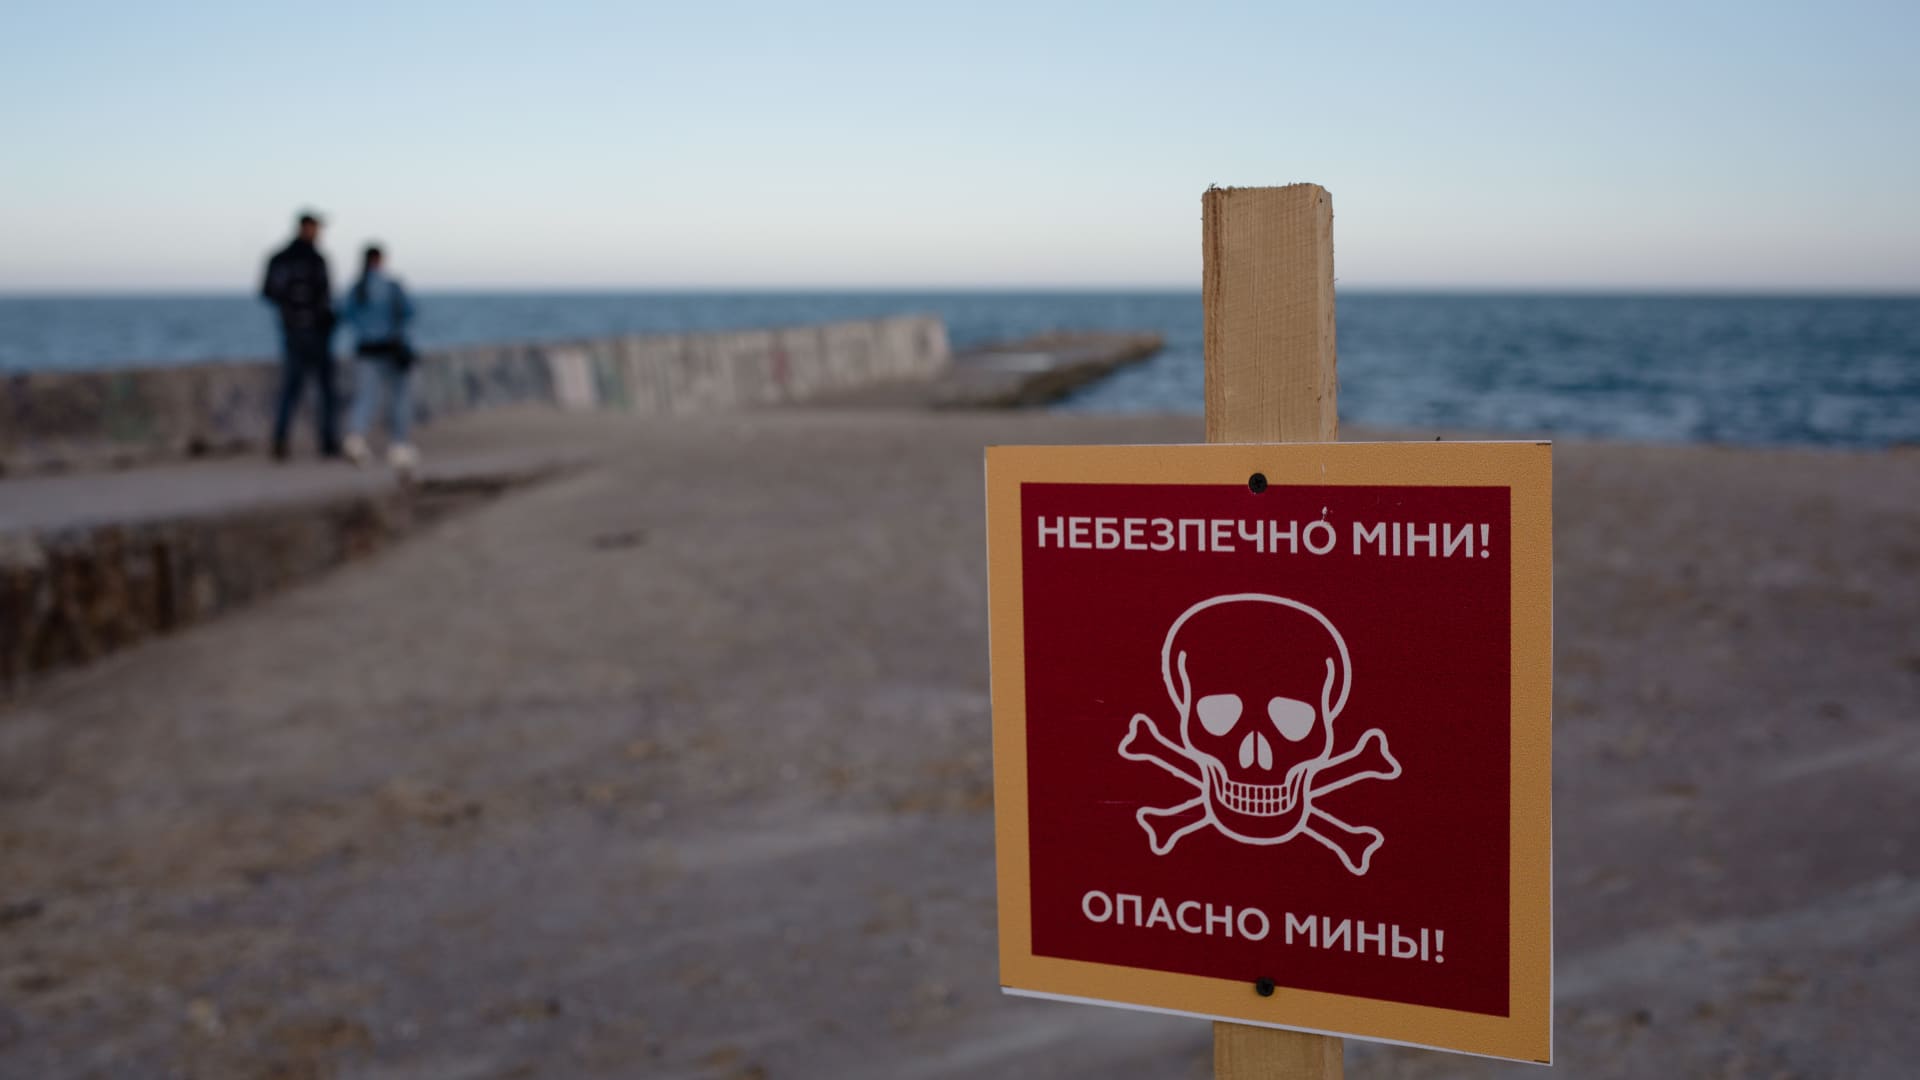 Russia and Ukraine battle over underwater mines in the Black Sea